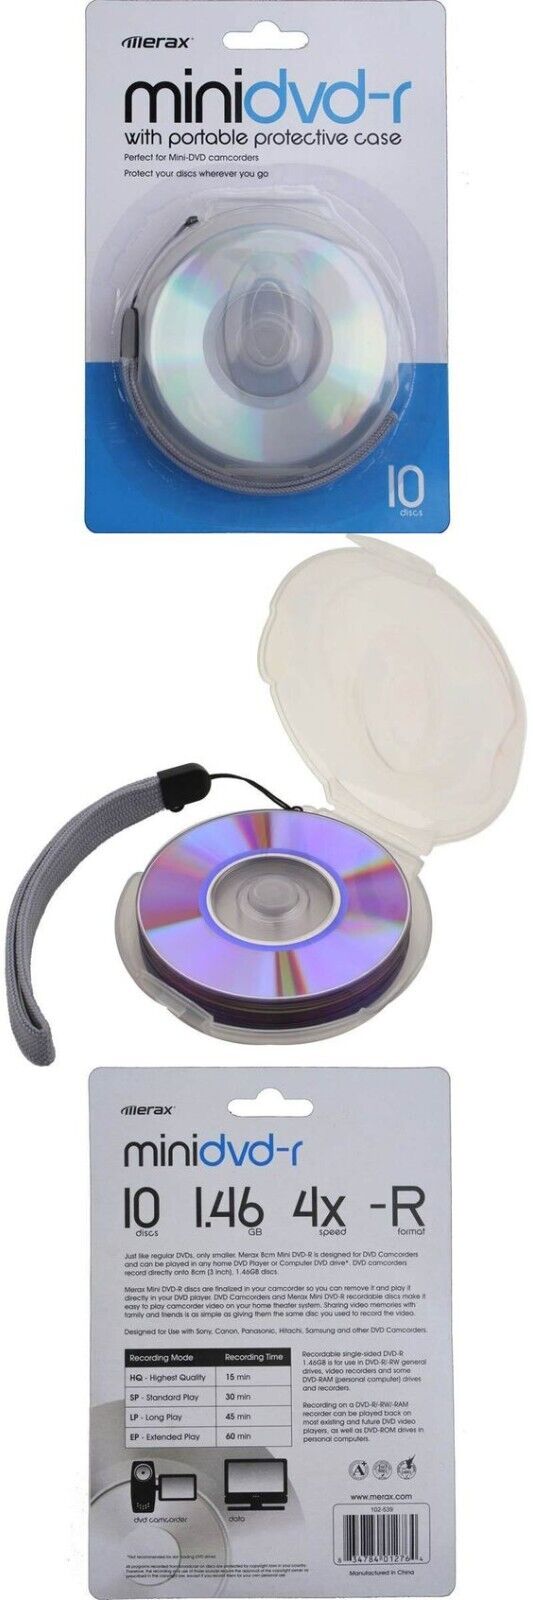 Merax Mini DVD-R 4x 1.4GB Blank Media (10 pcs) with Portable Protective Case